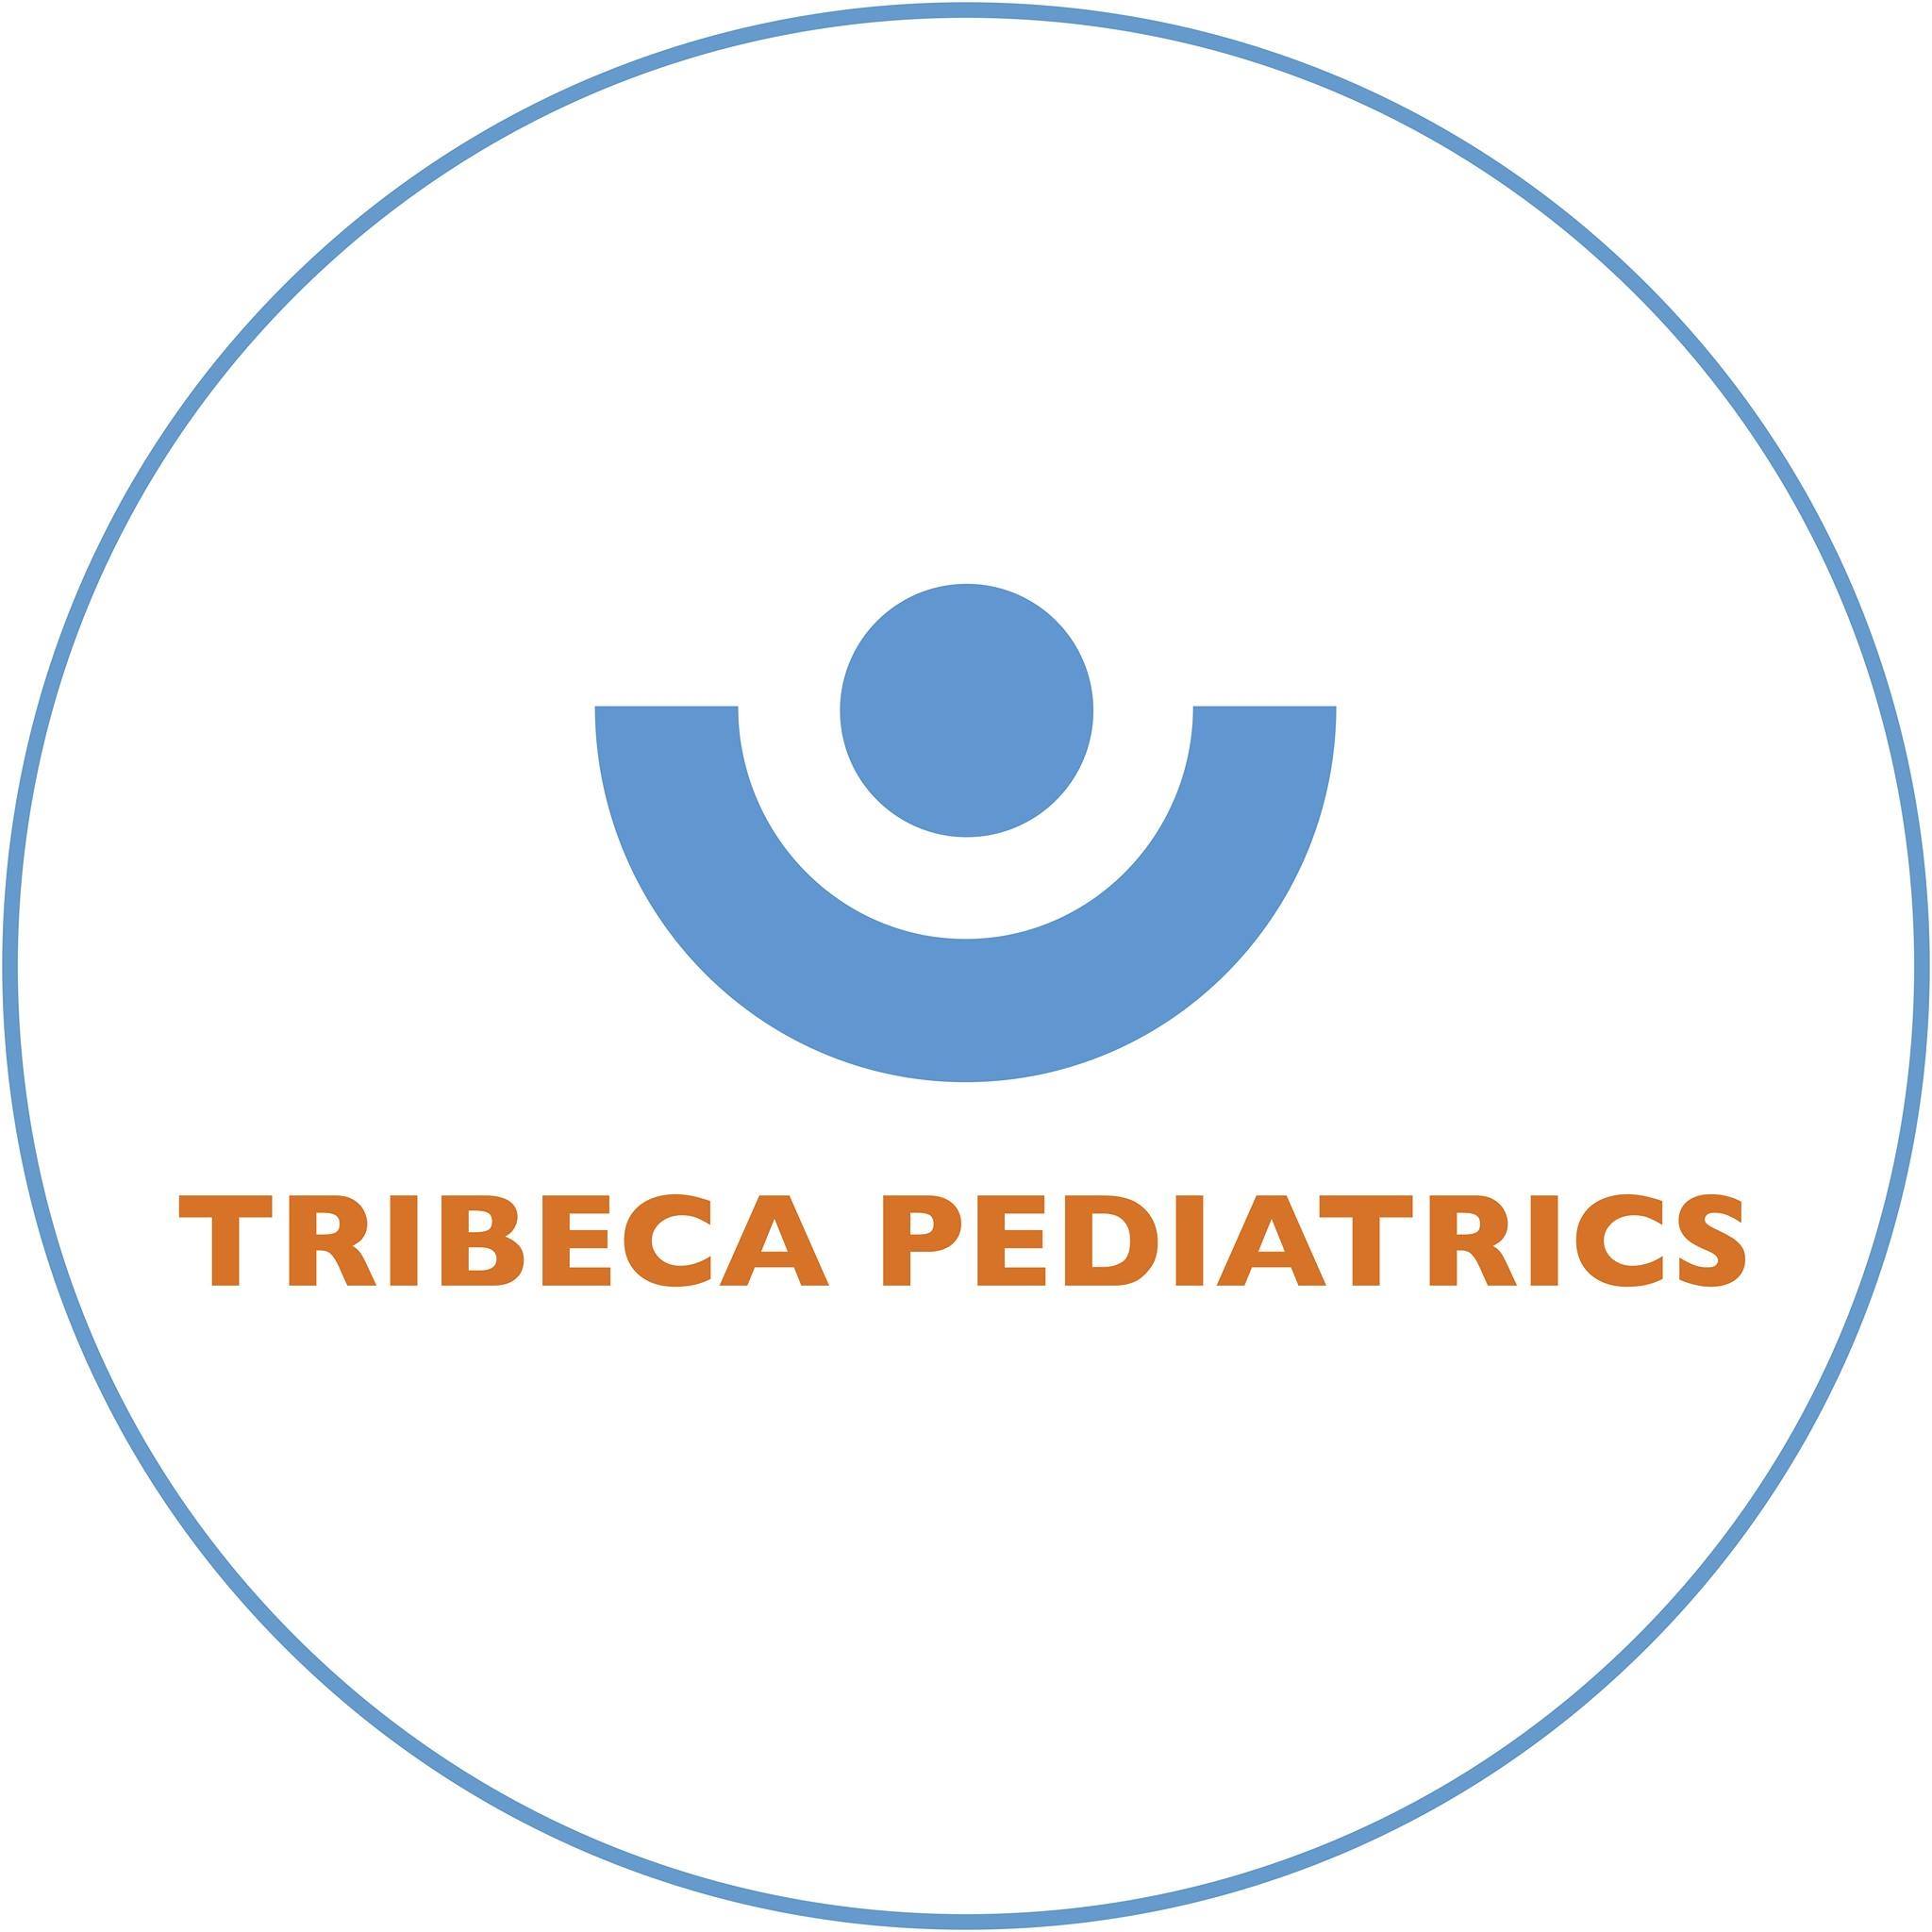 Tribeca Pediatrics